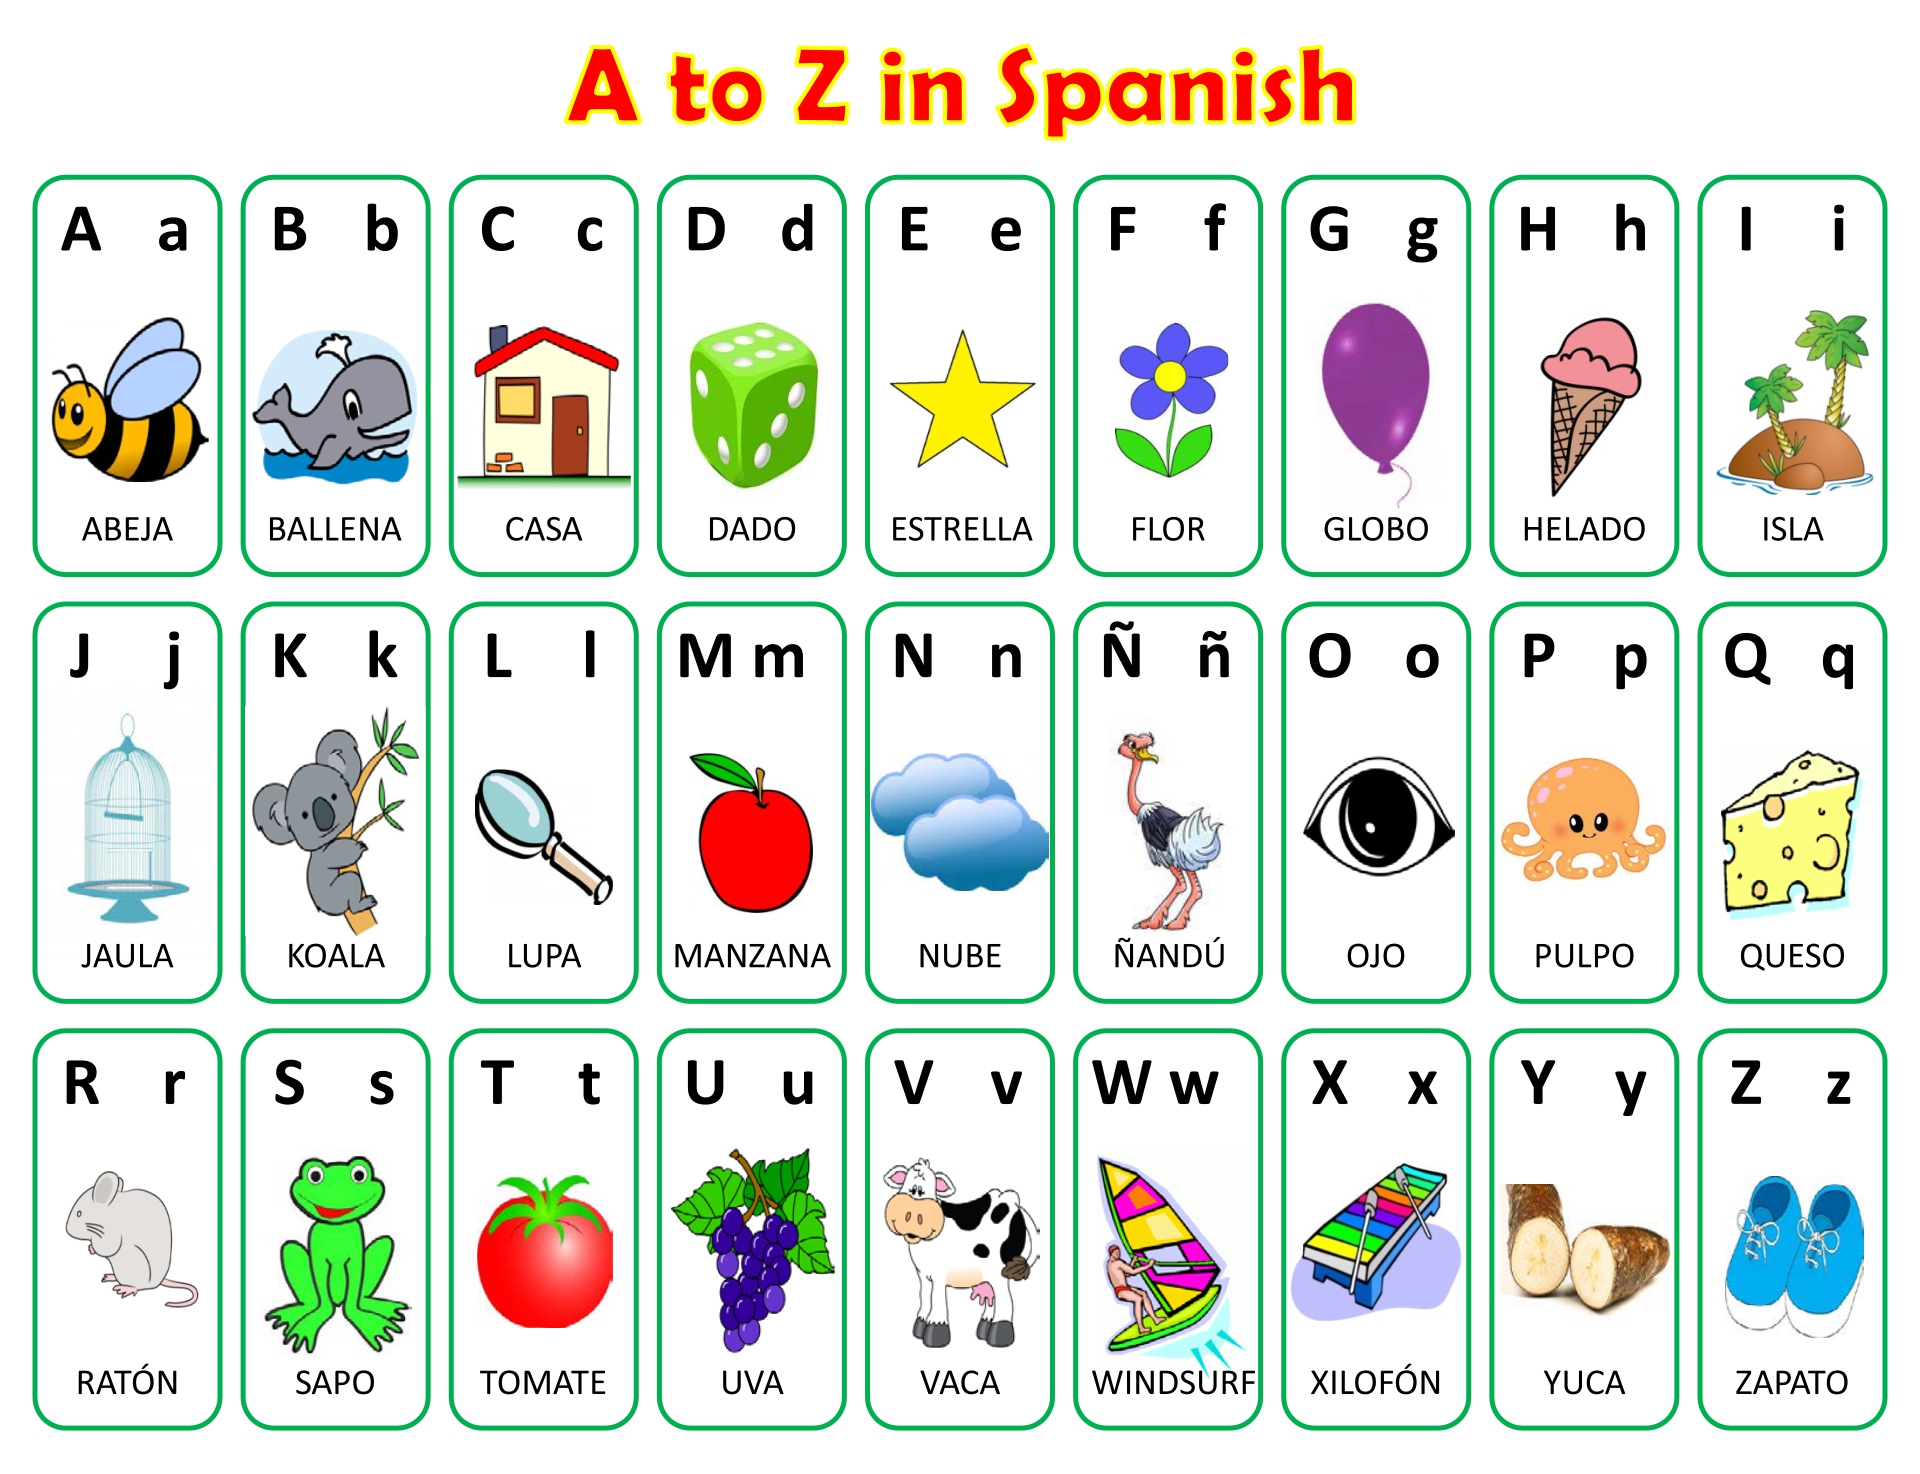 Spanish Alphabet List